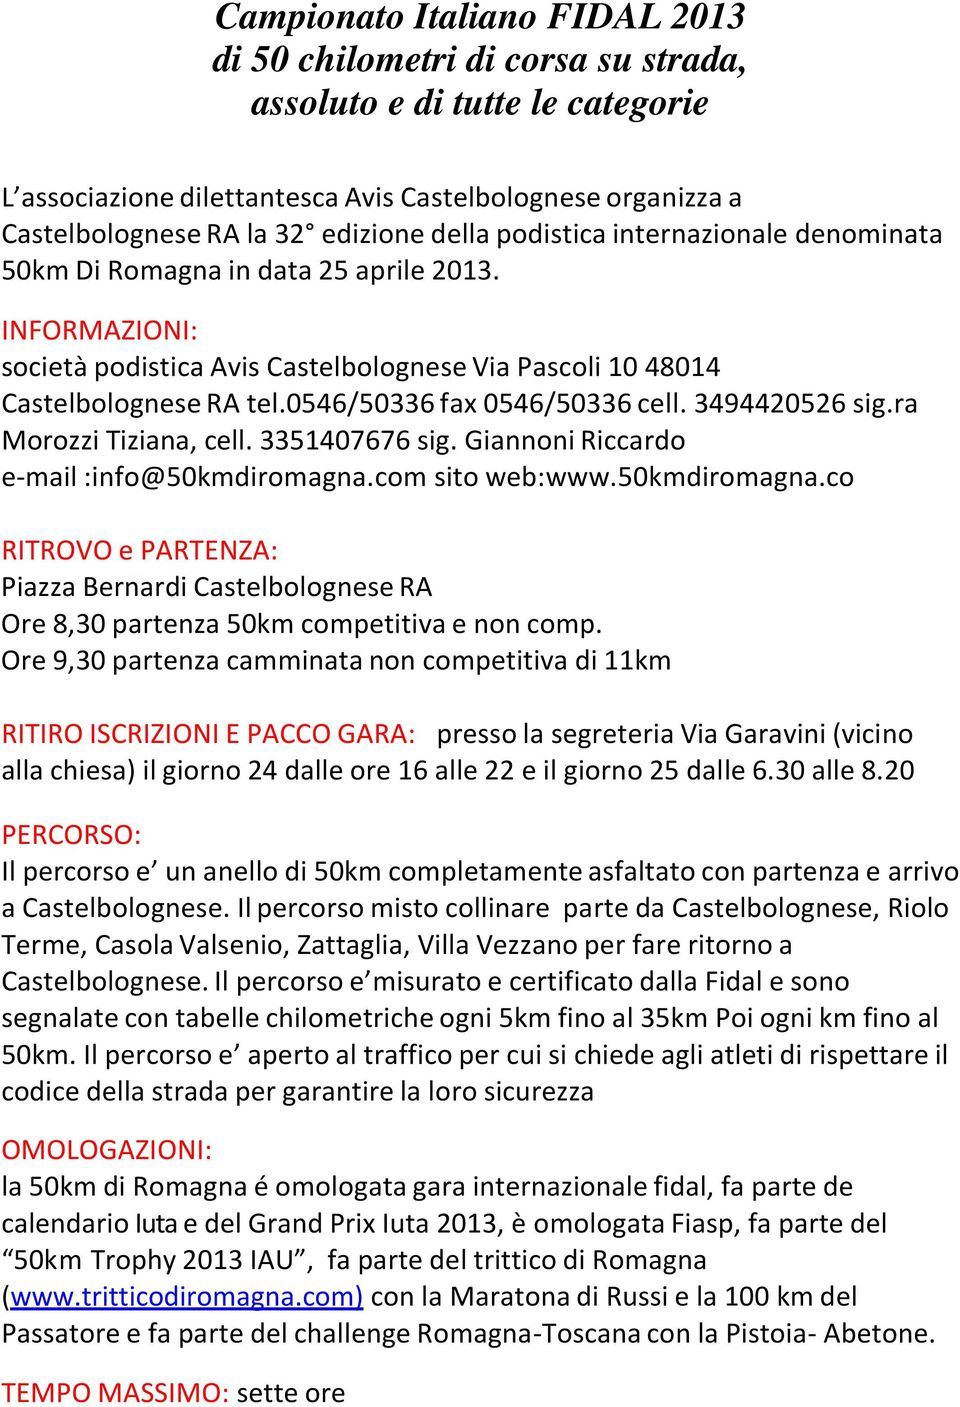 0546/50336 fax 0546/50336 cell. 3494420526 sig.ra Morozzi Tiziana, cell. 3351407676 sig. Giannoni Riccardo e-mail :info@50kmdiromagna.